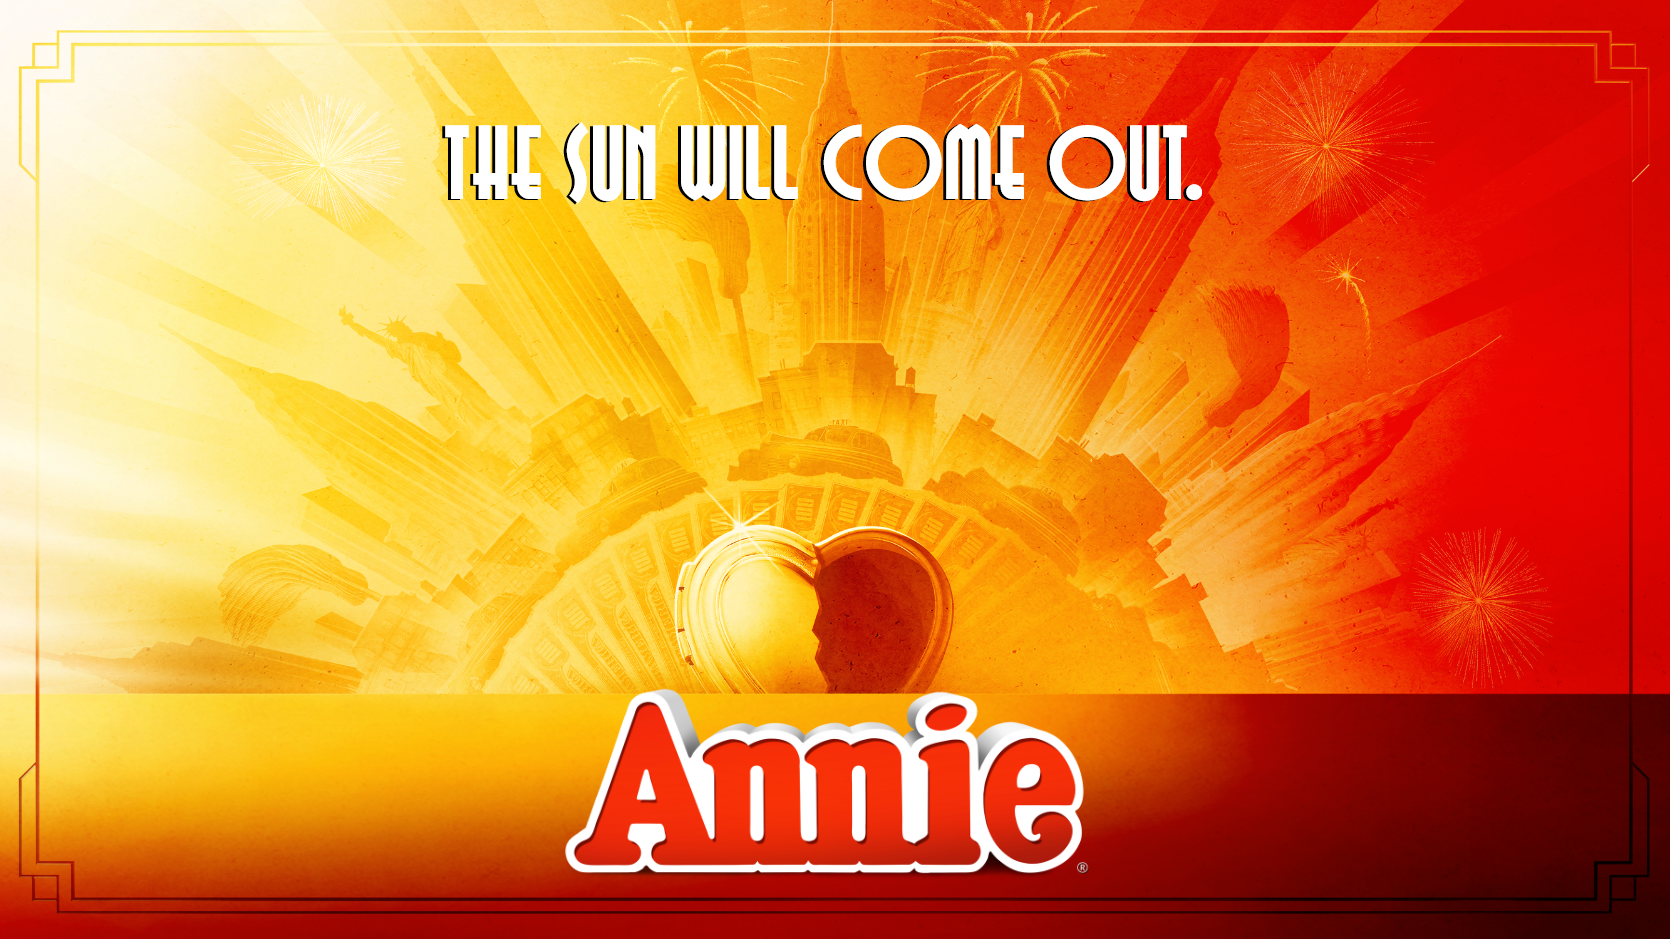 sunrise image with annie logo